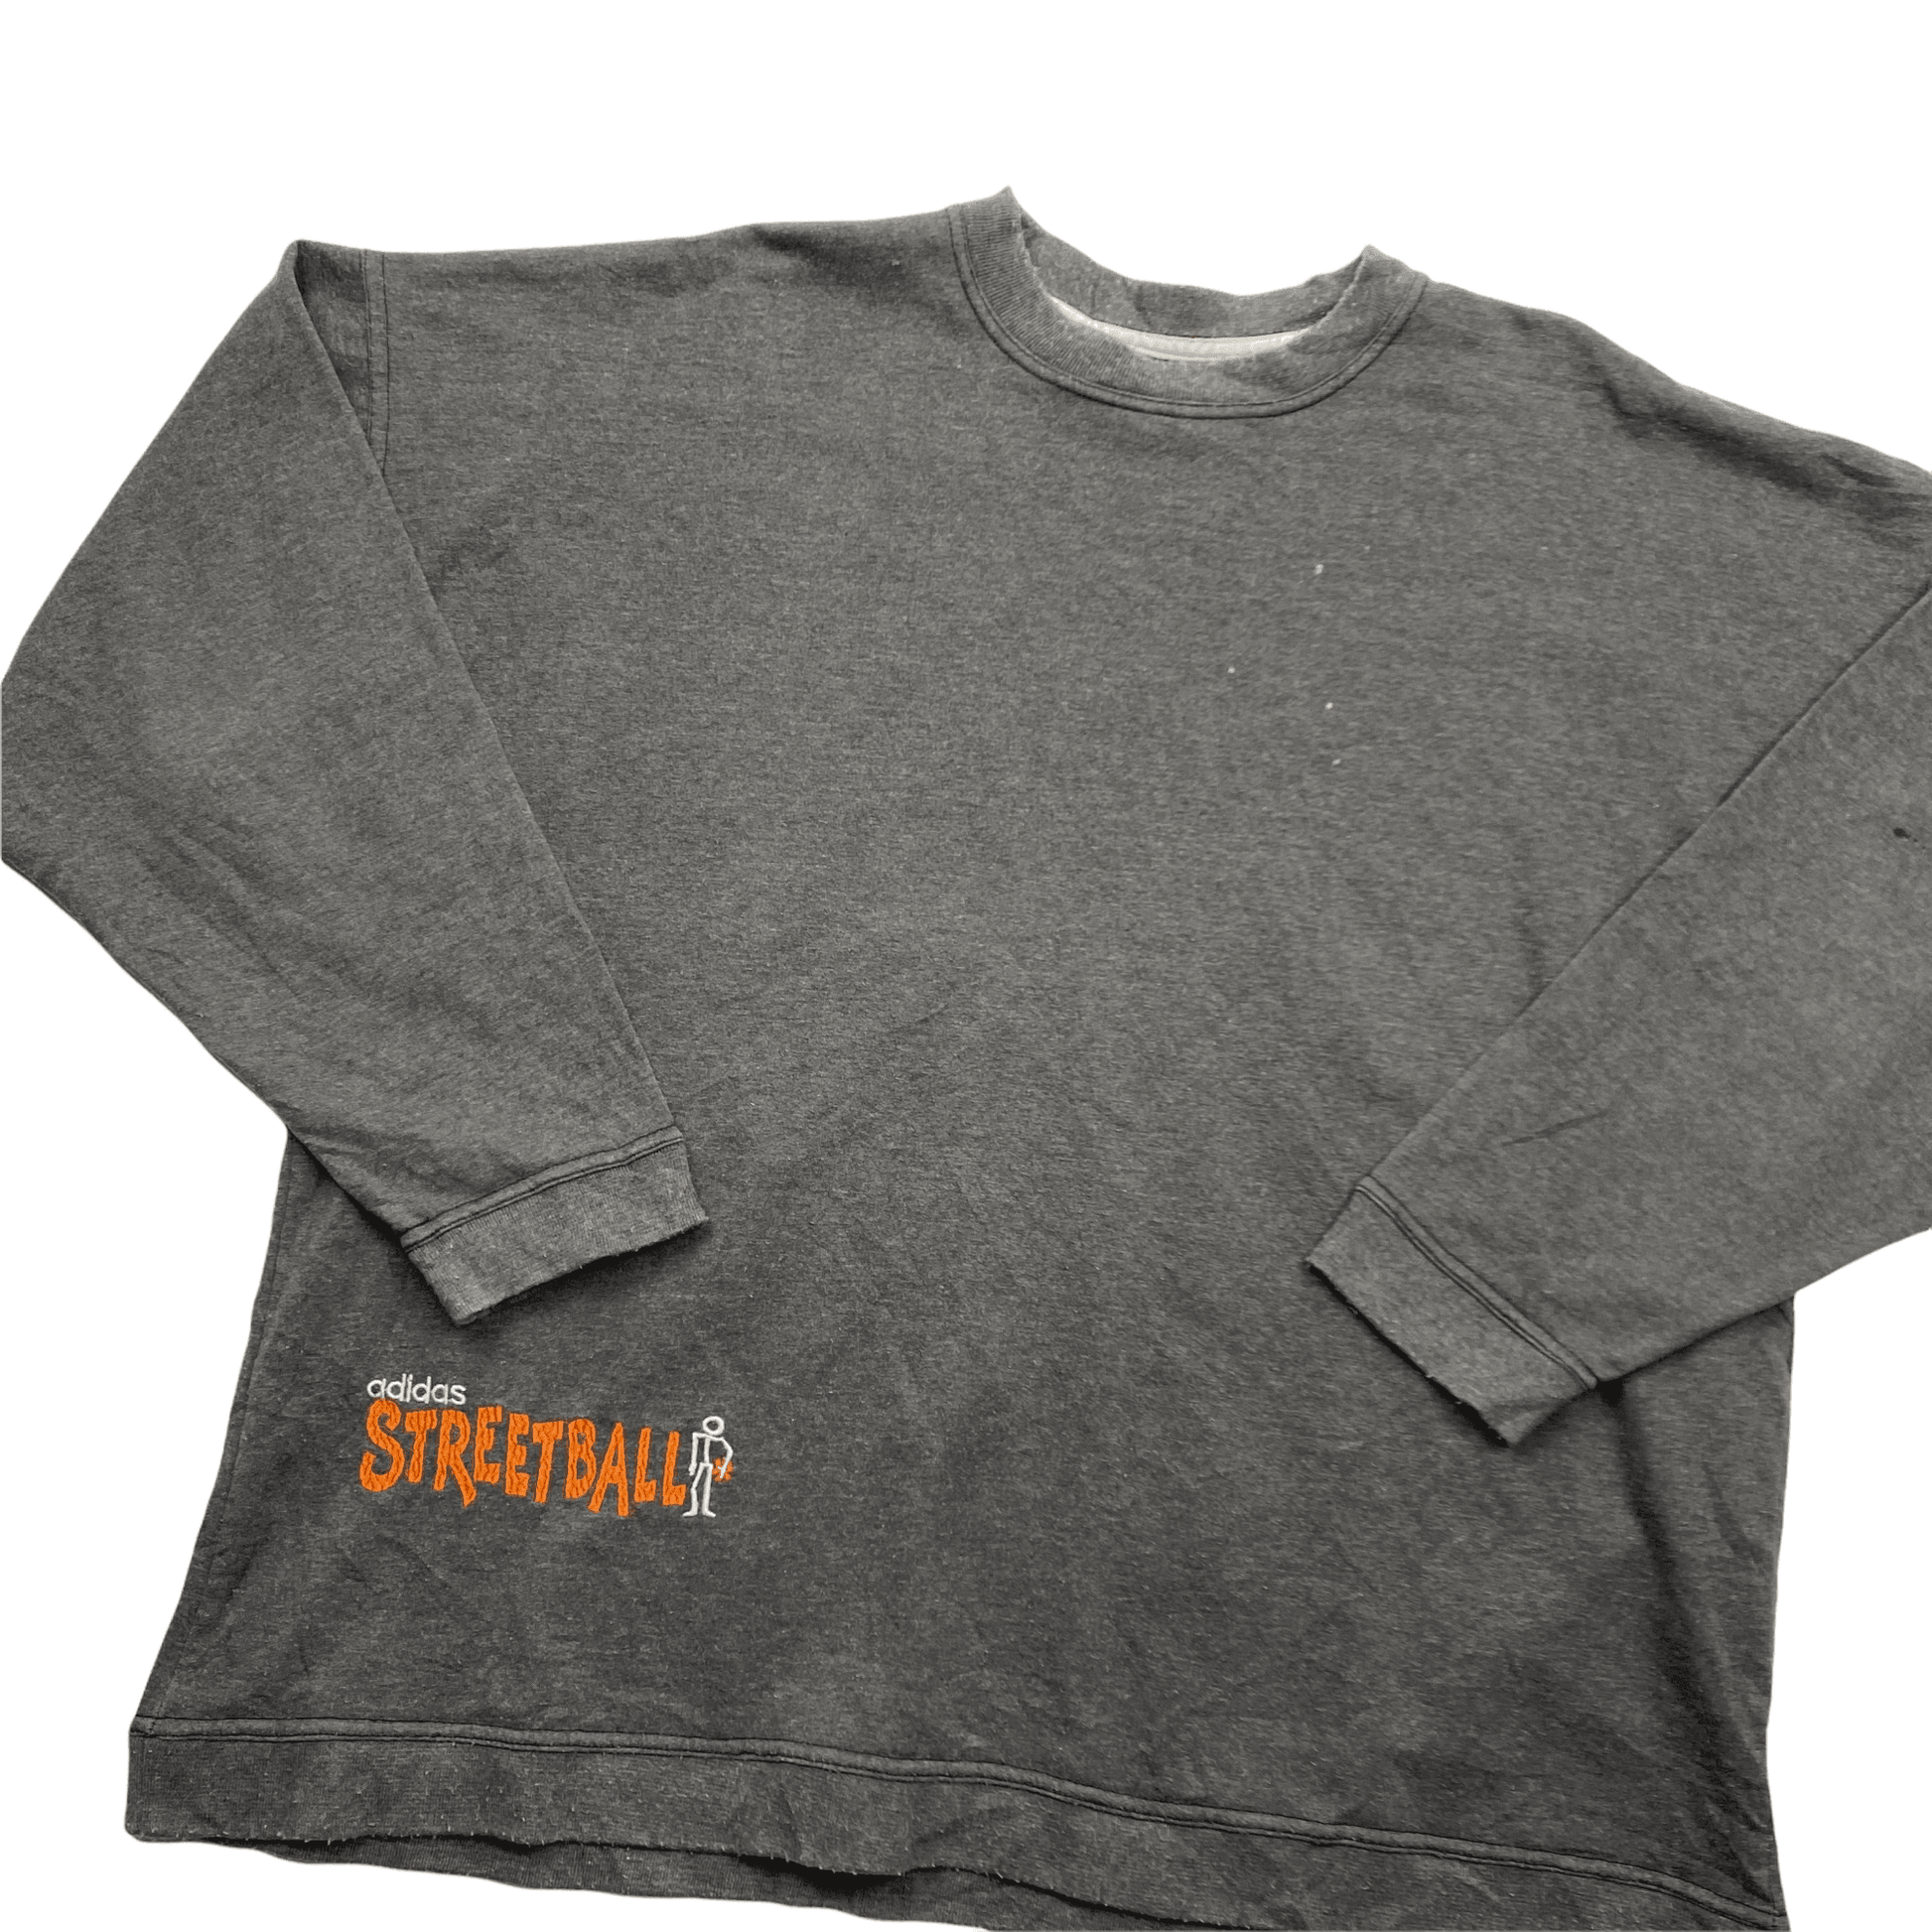 Vintage 90s Grey Adidas Streetball Sweatshirt - Medium - The Streetwear Studio